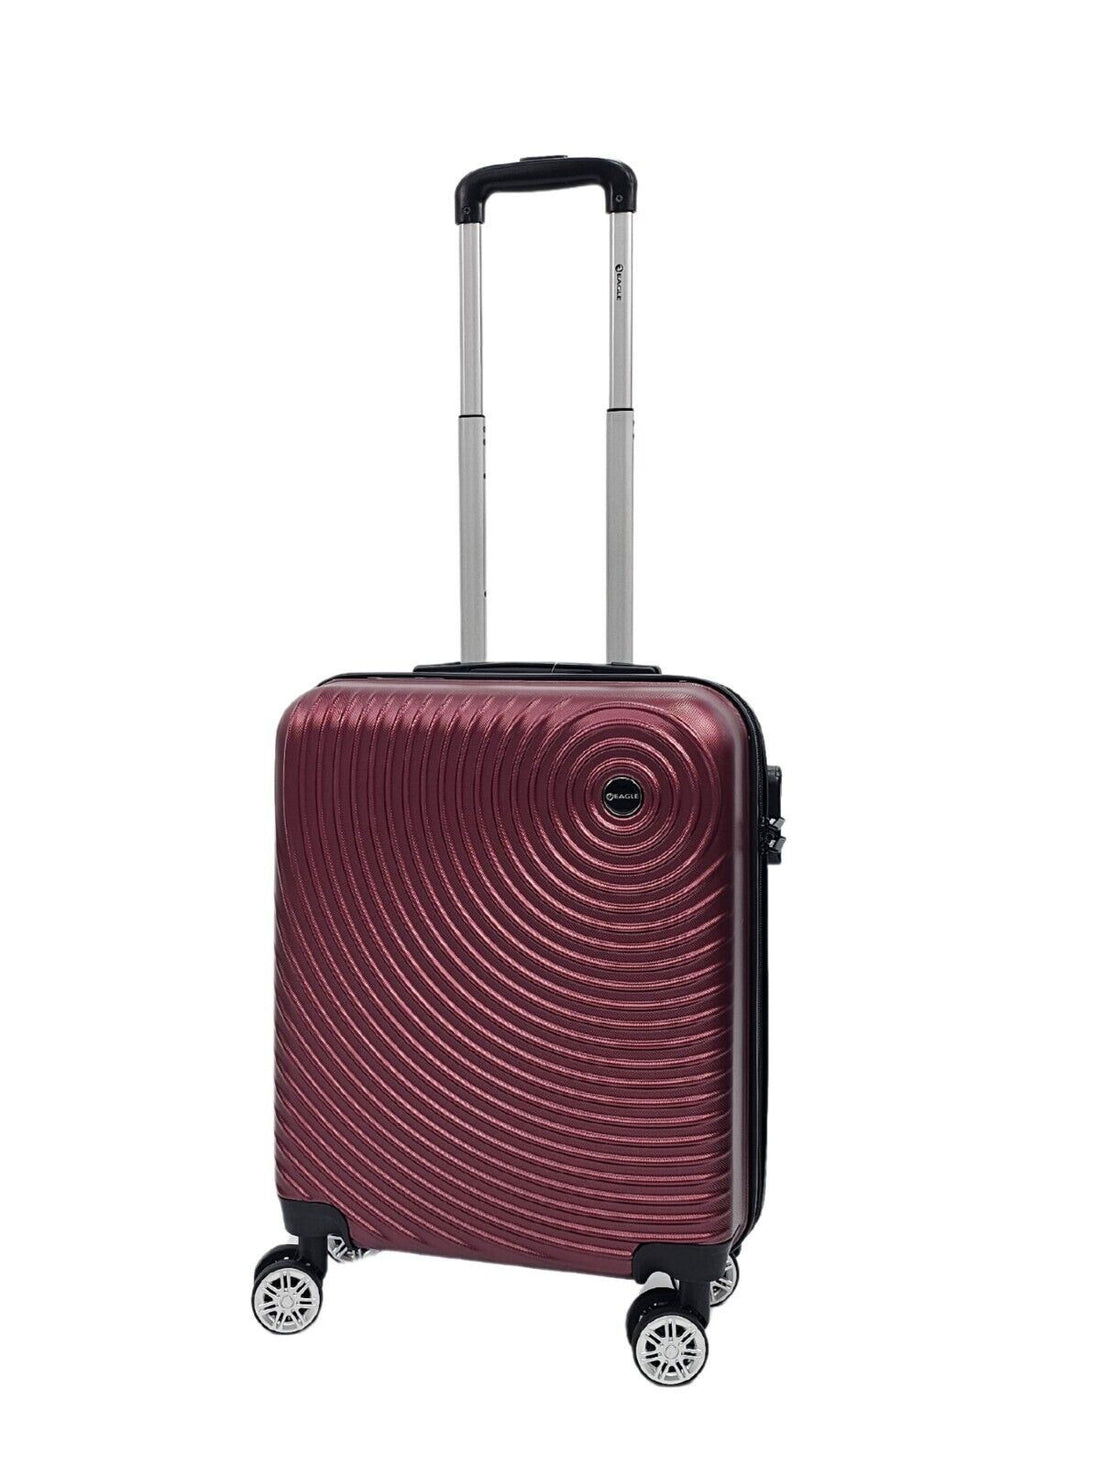 Hard Shell Burgundy Cabin Suitcase Set 8 Wheel Luggage Case Travel Bag - Upperclass Fashions 